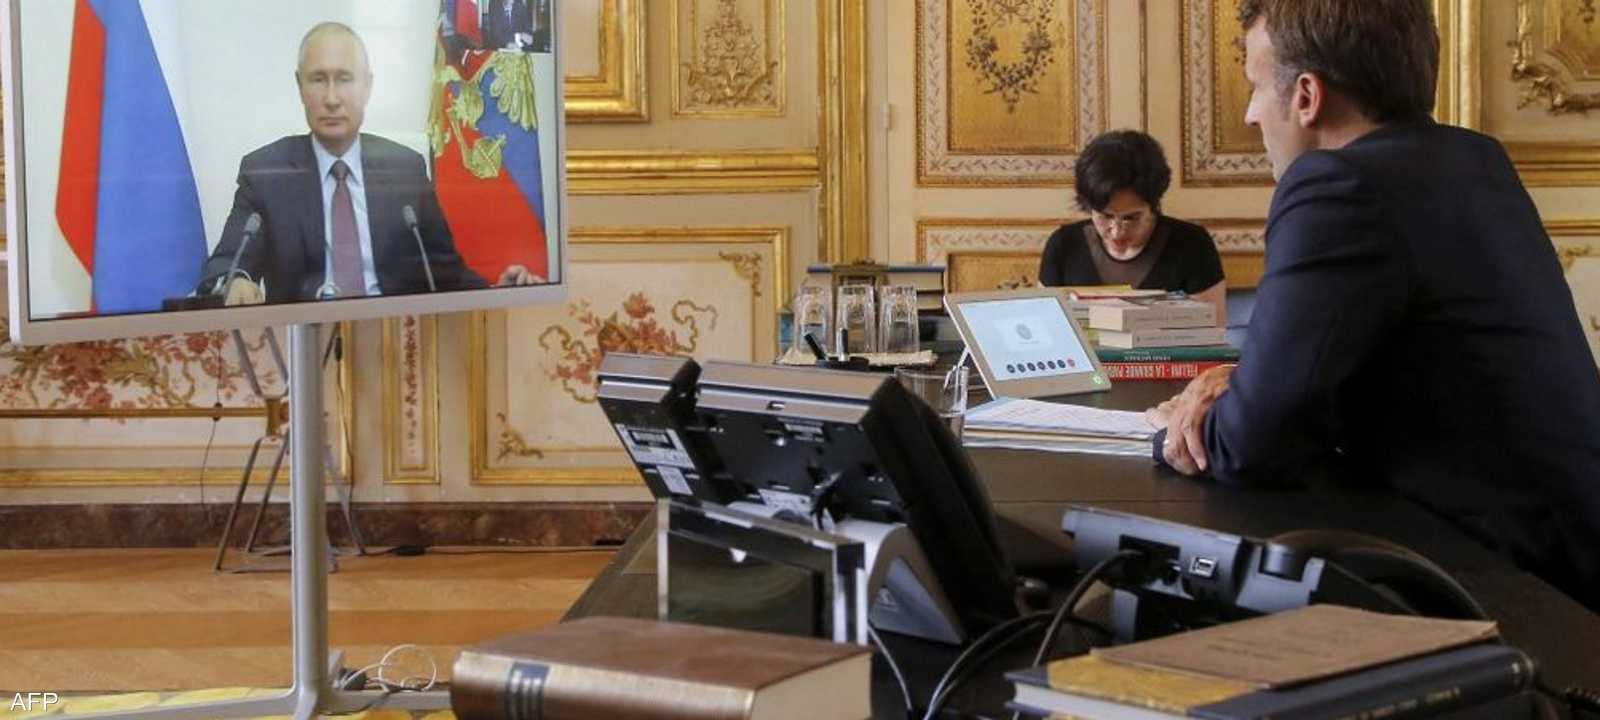 مباحثات بين رئيسي فرنسا وروسيا